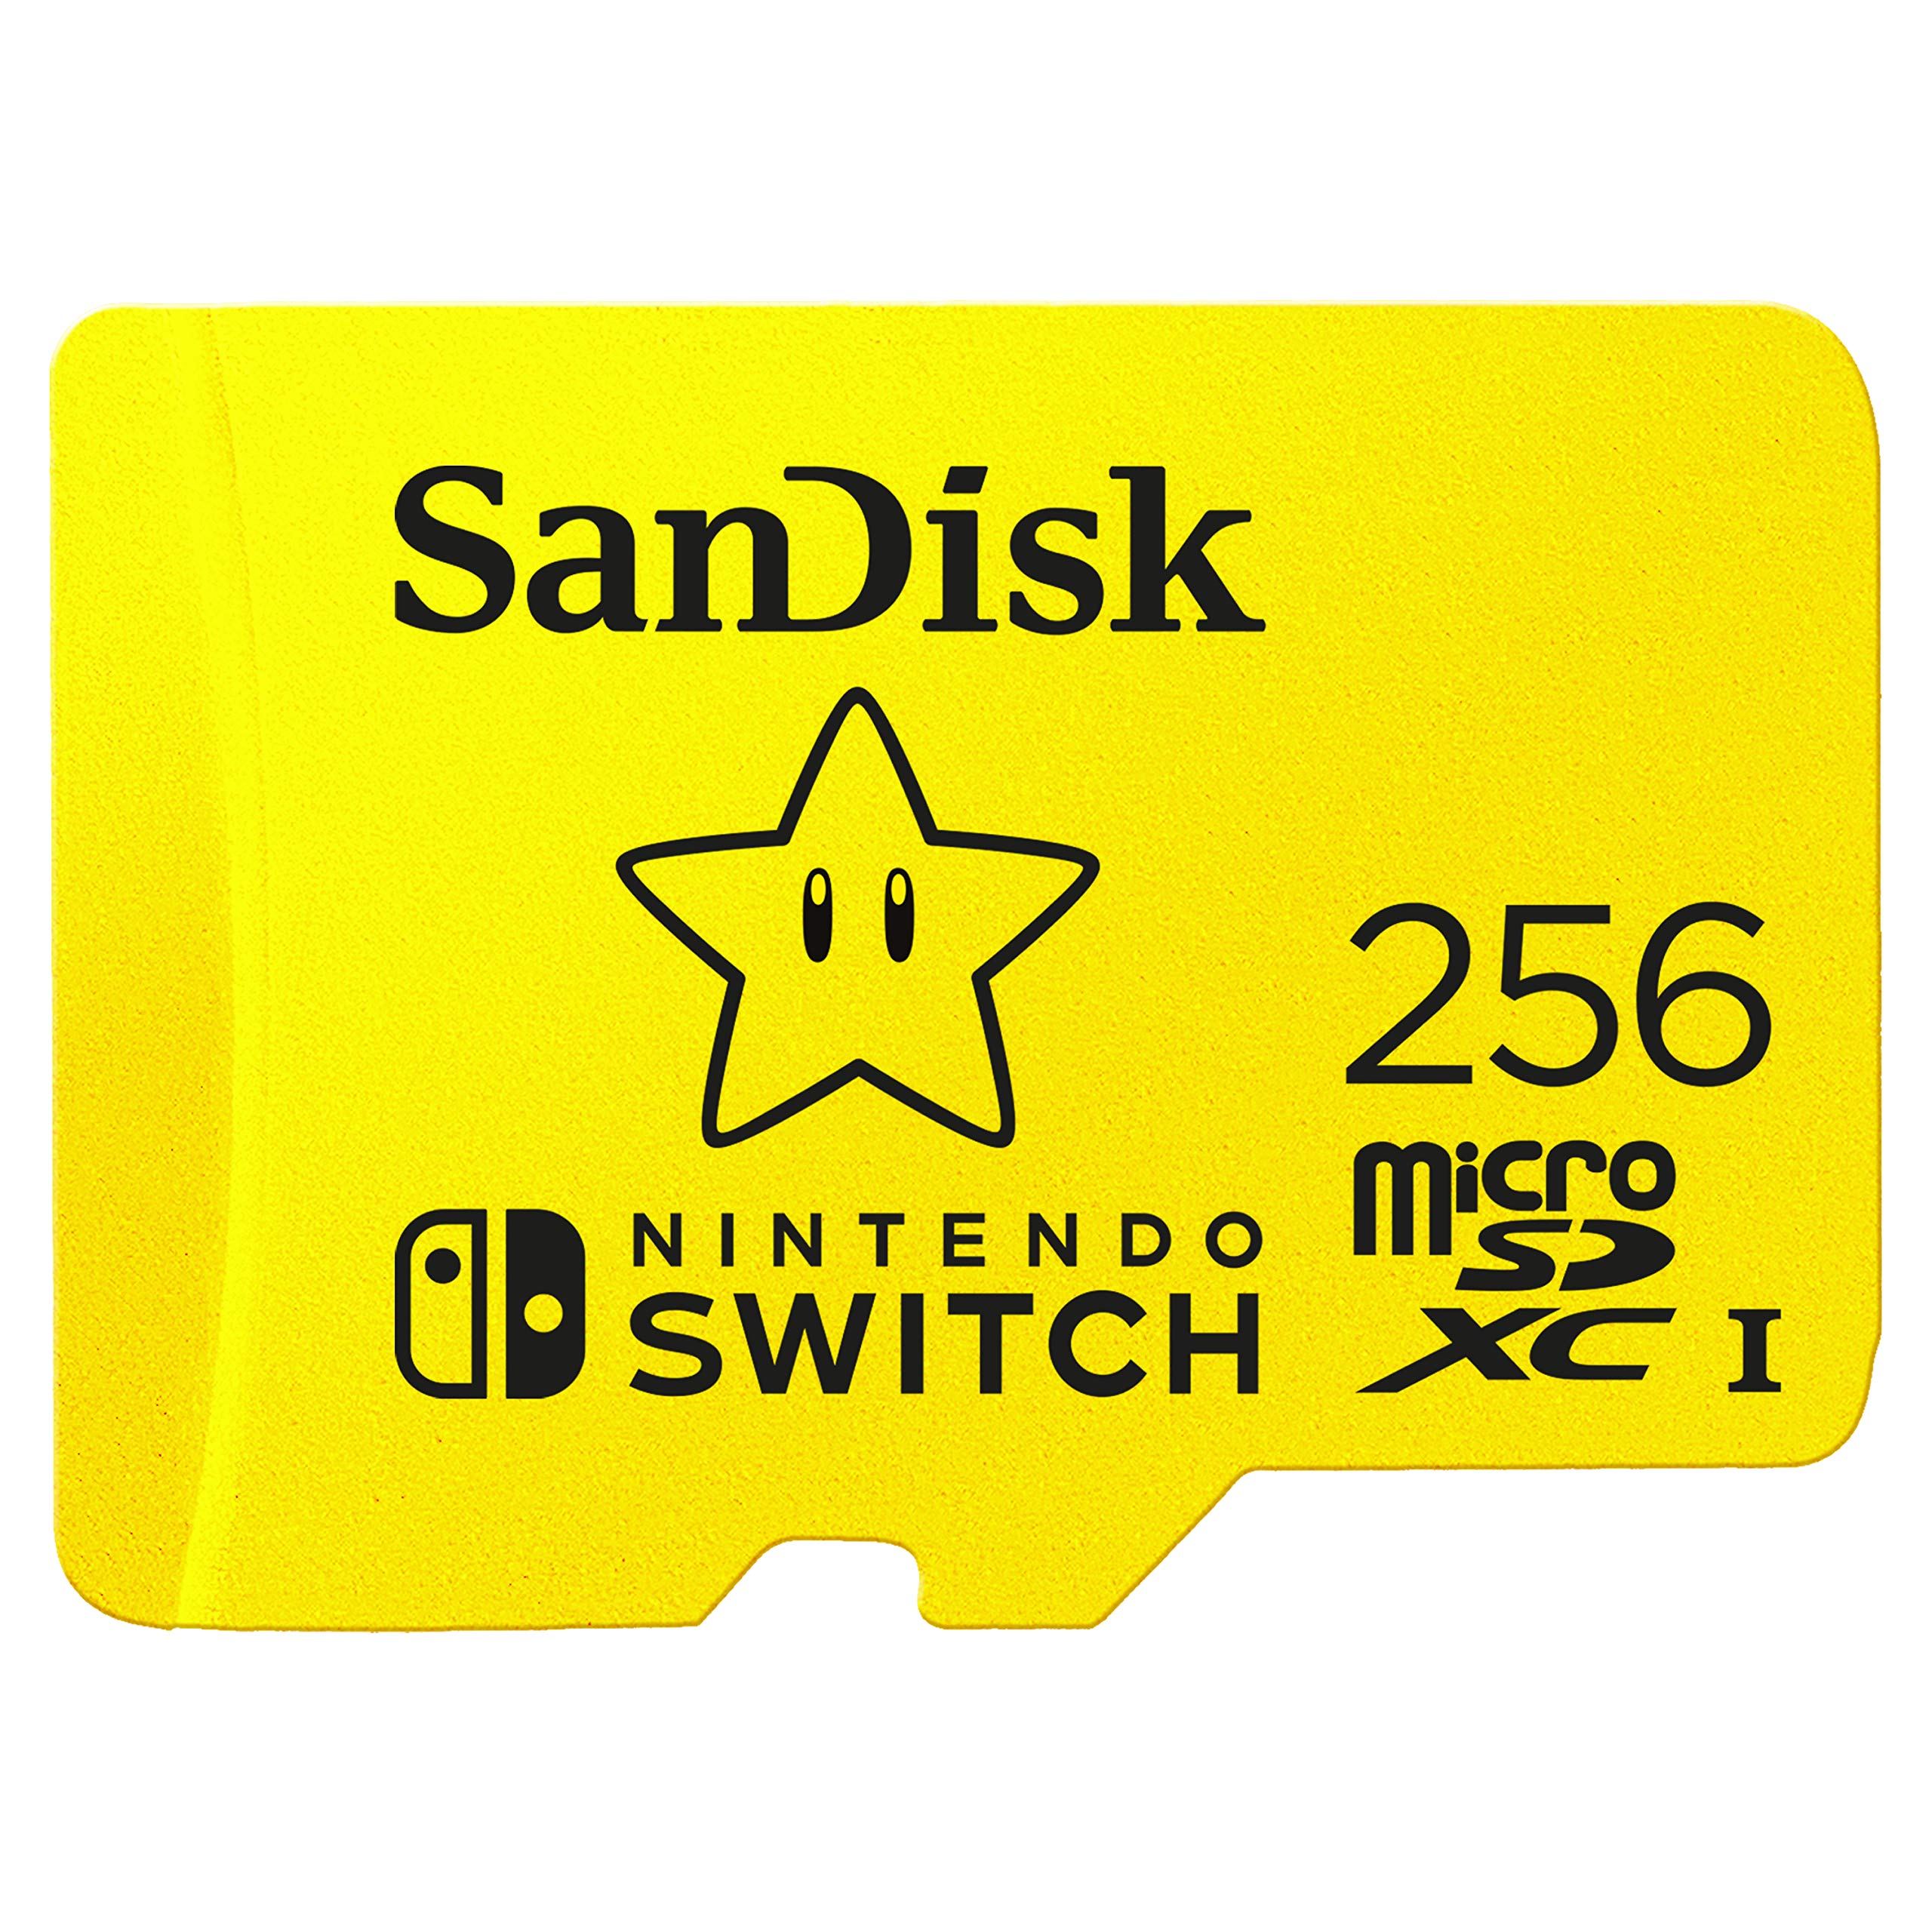 SanDisk microSDXC UHS-I card for Nintendo 256GB - Nintendo licensed Product, Yellow